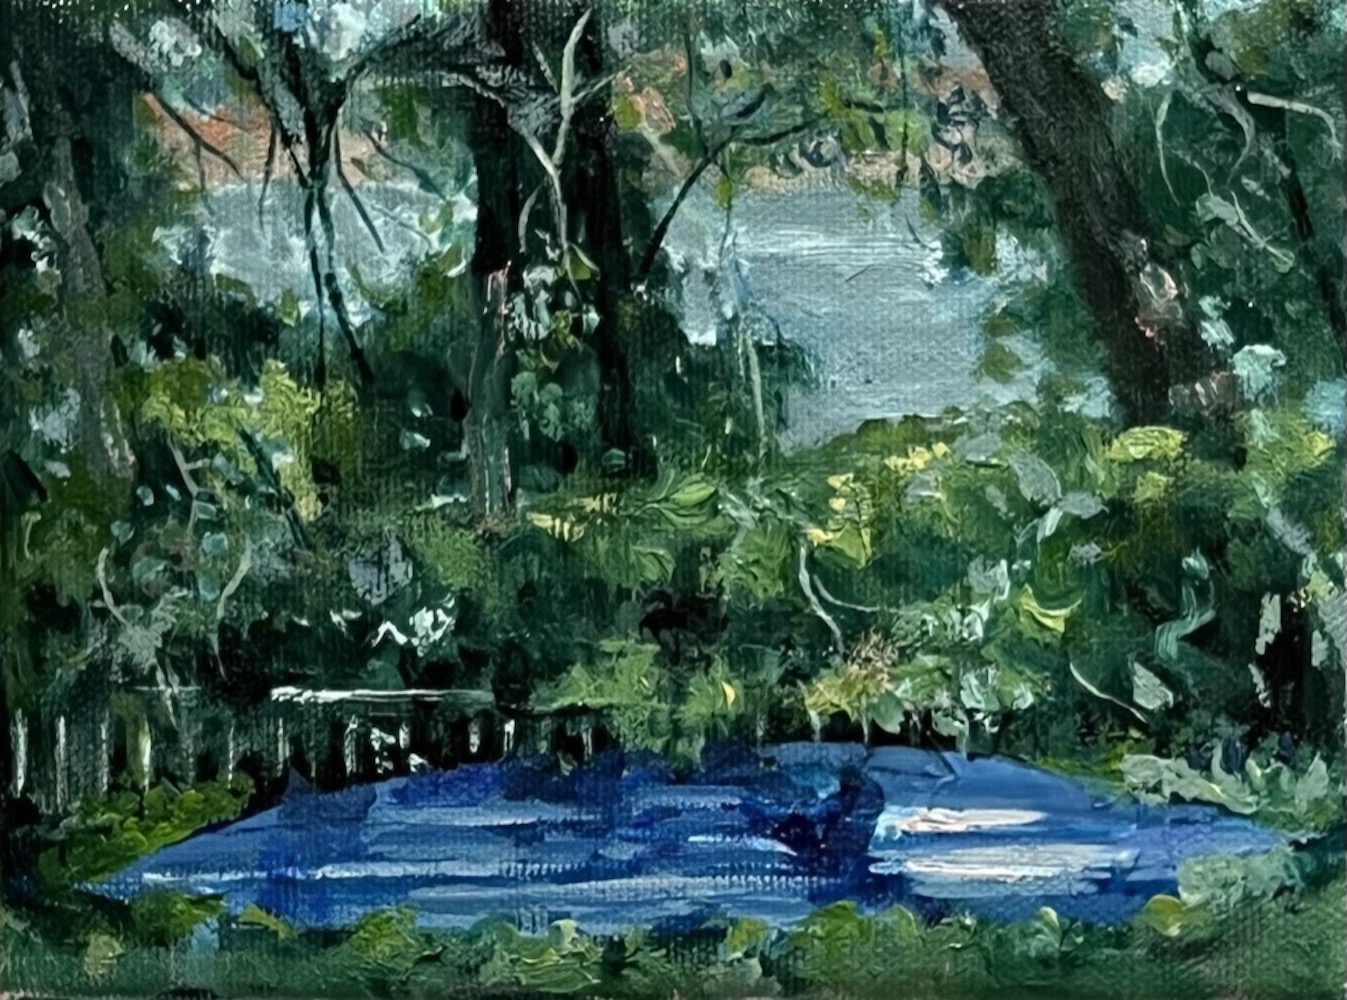 jinglu-zhao-blue-canoe-paintings-miniature-art-online-gallery